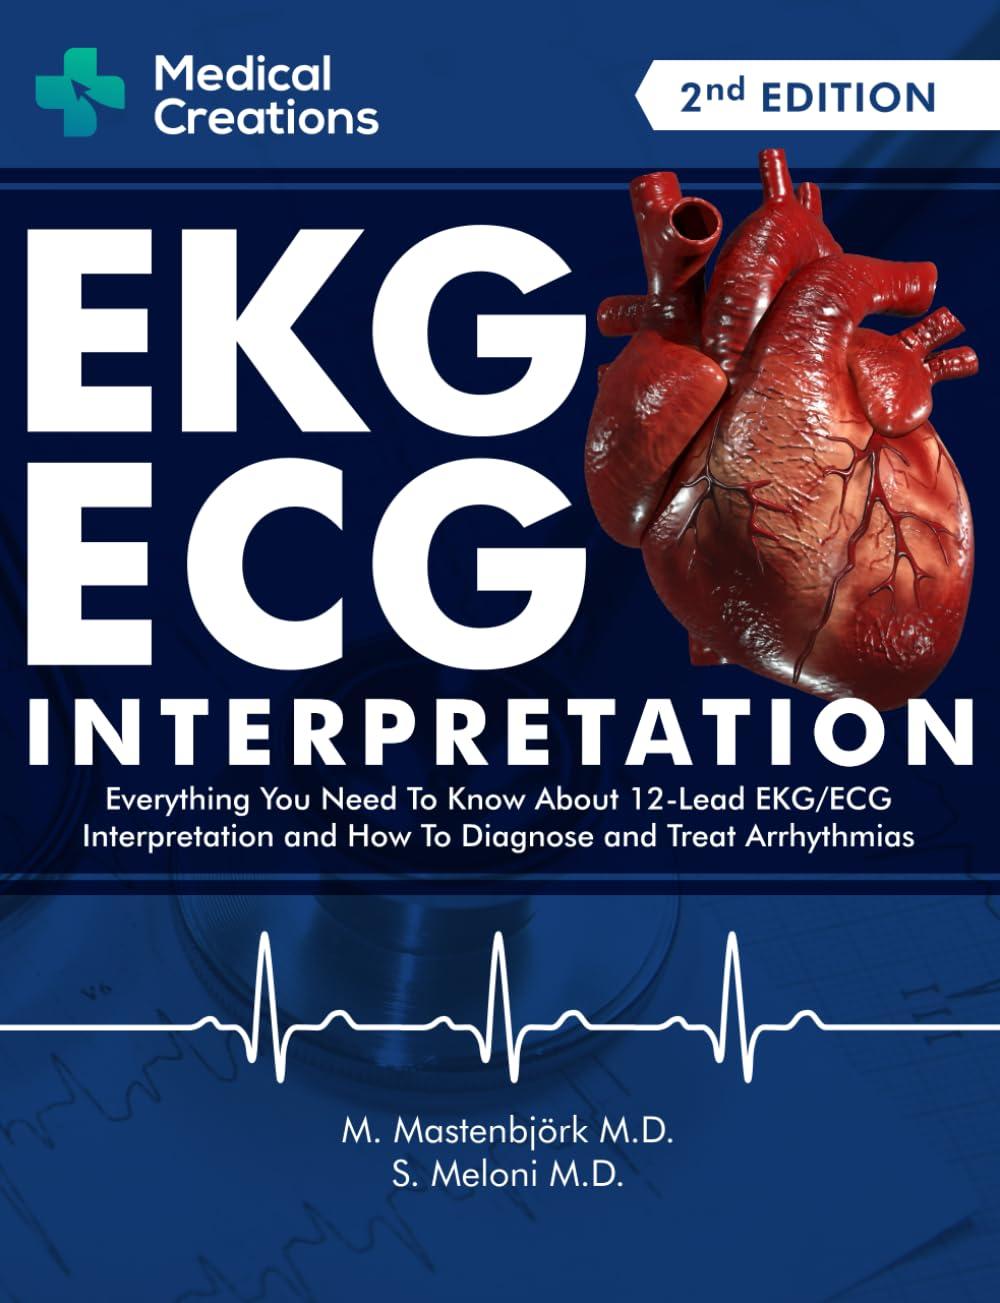 ekg ecg interpretation everything you need to know about the 12 lead ecg ekg interpretation and how to